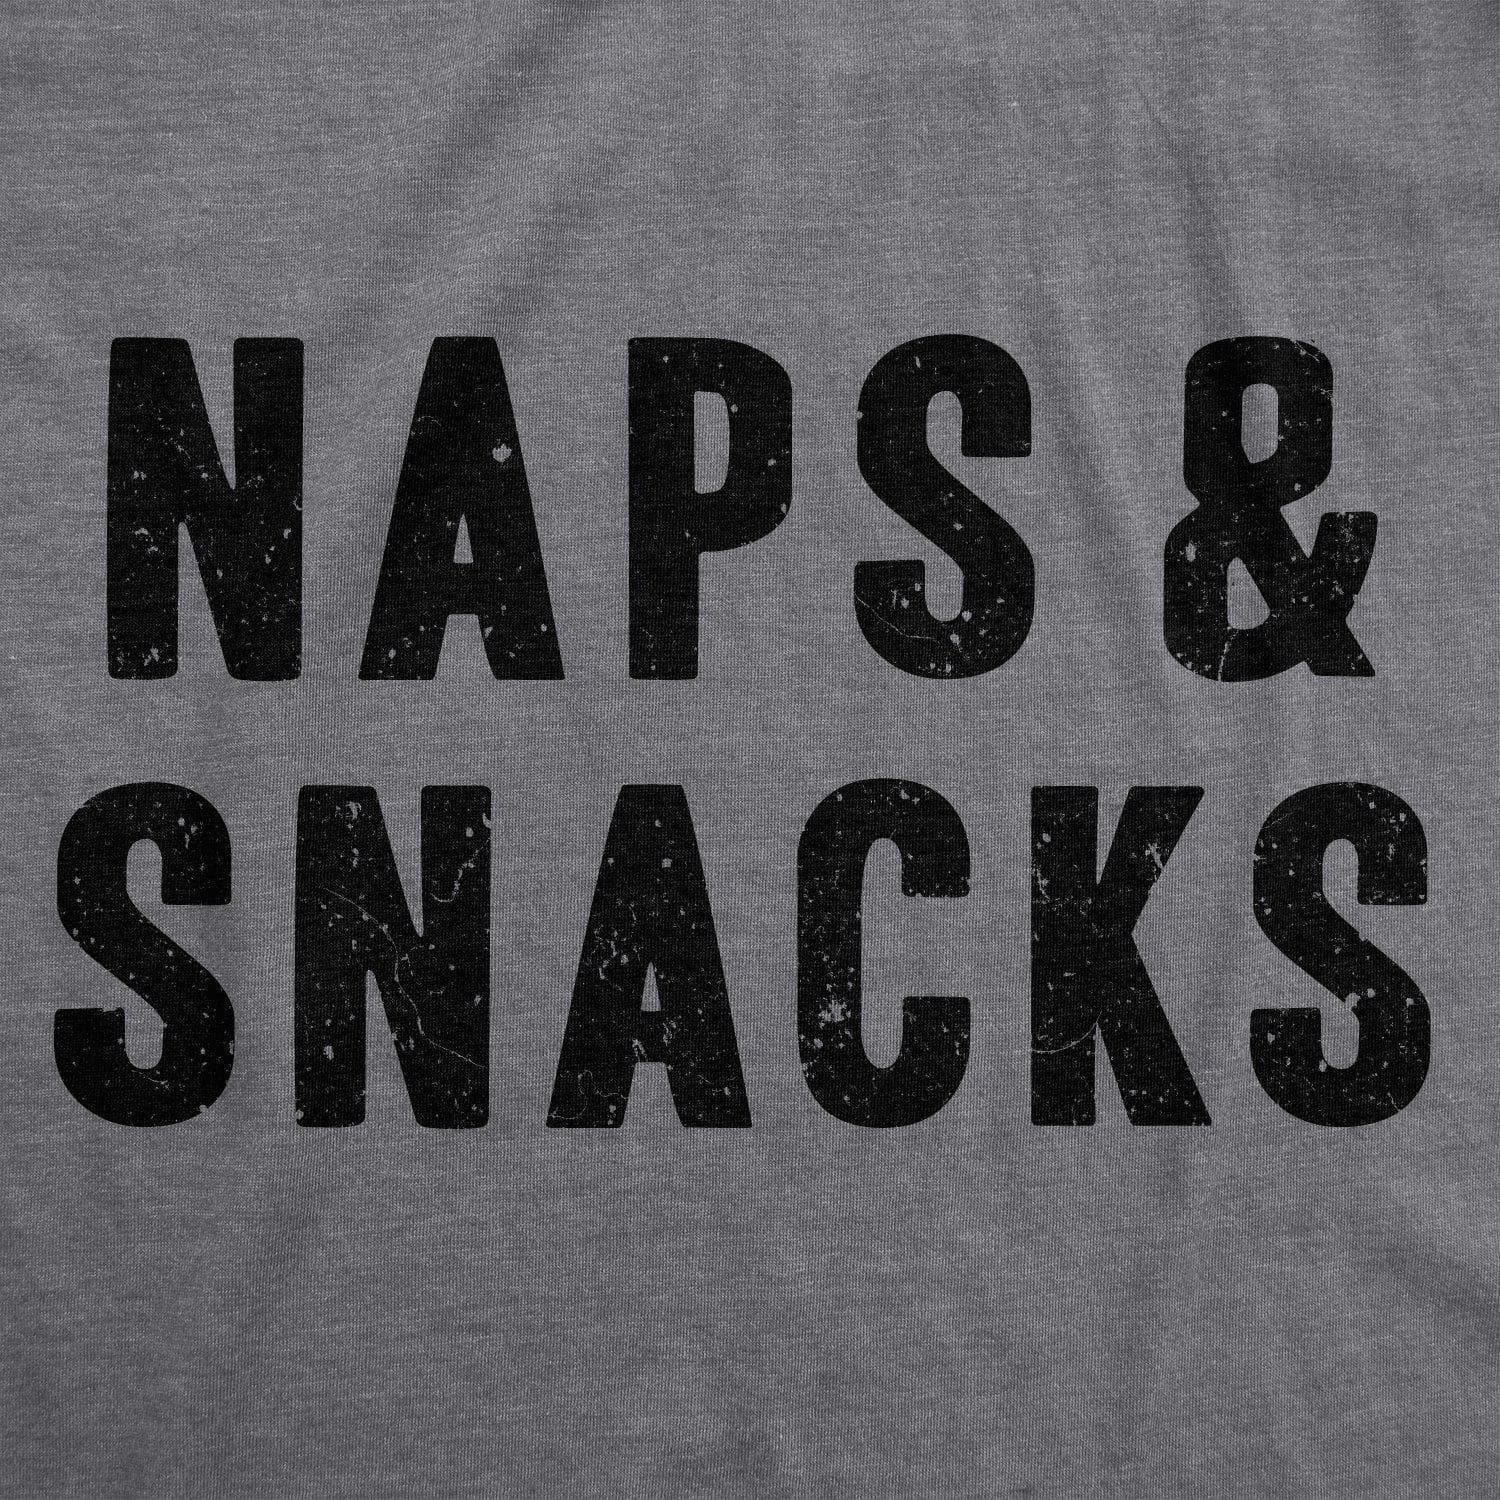 Naps And Snacks Women's Tshirt  -  Crazy Dog T-Shirts